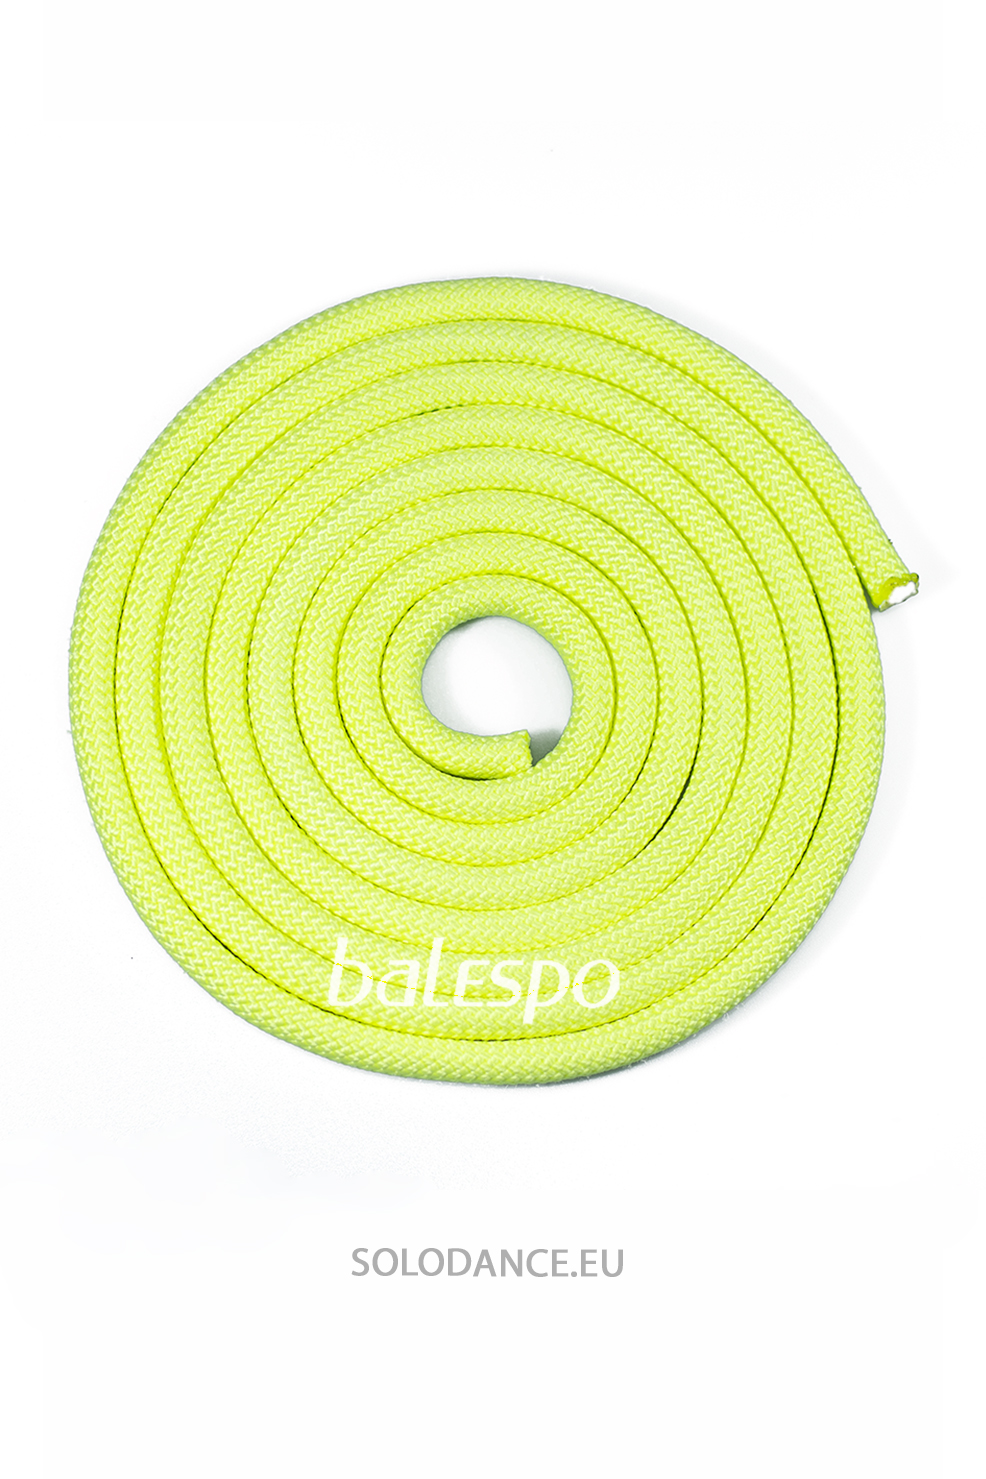 Gymnastic rope BALESPO neon yellow 2,5 m